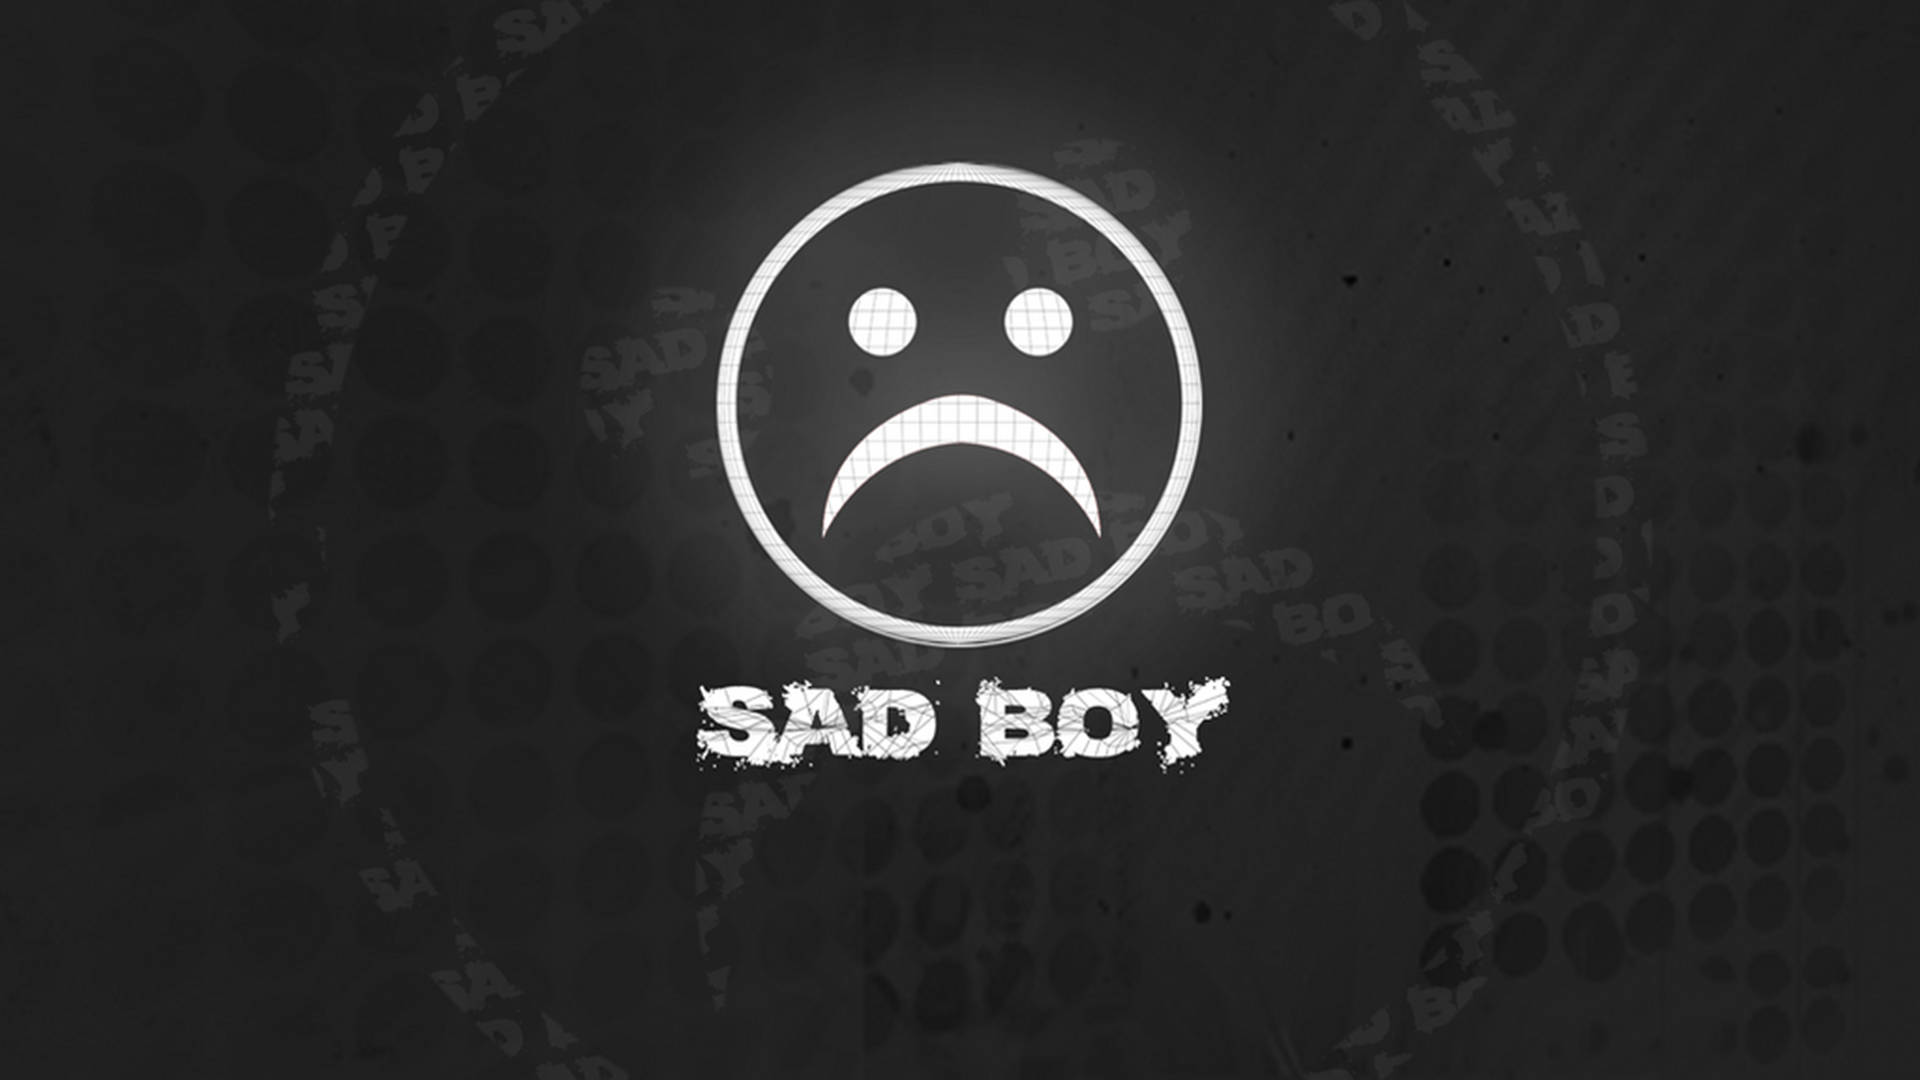 Free Sad Boy Wallpaper Downloads, [200+] Sad Boy Wallpapers for FREE |  